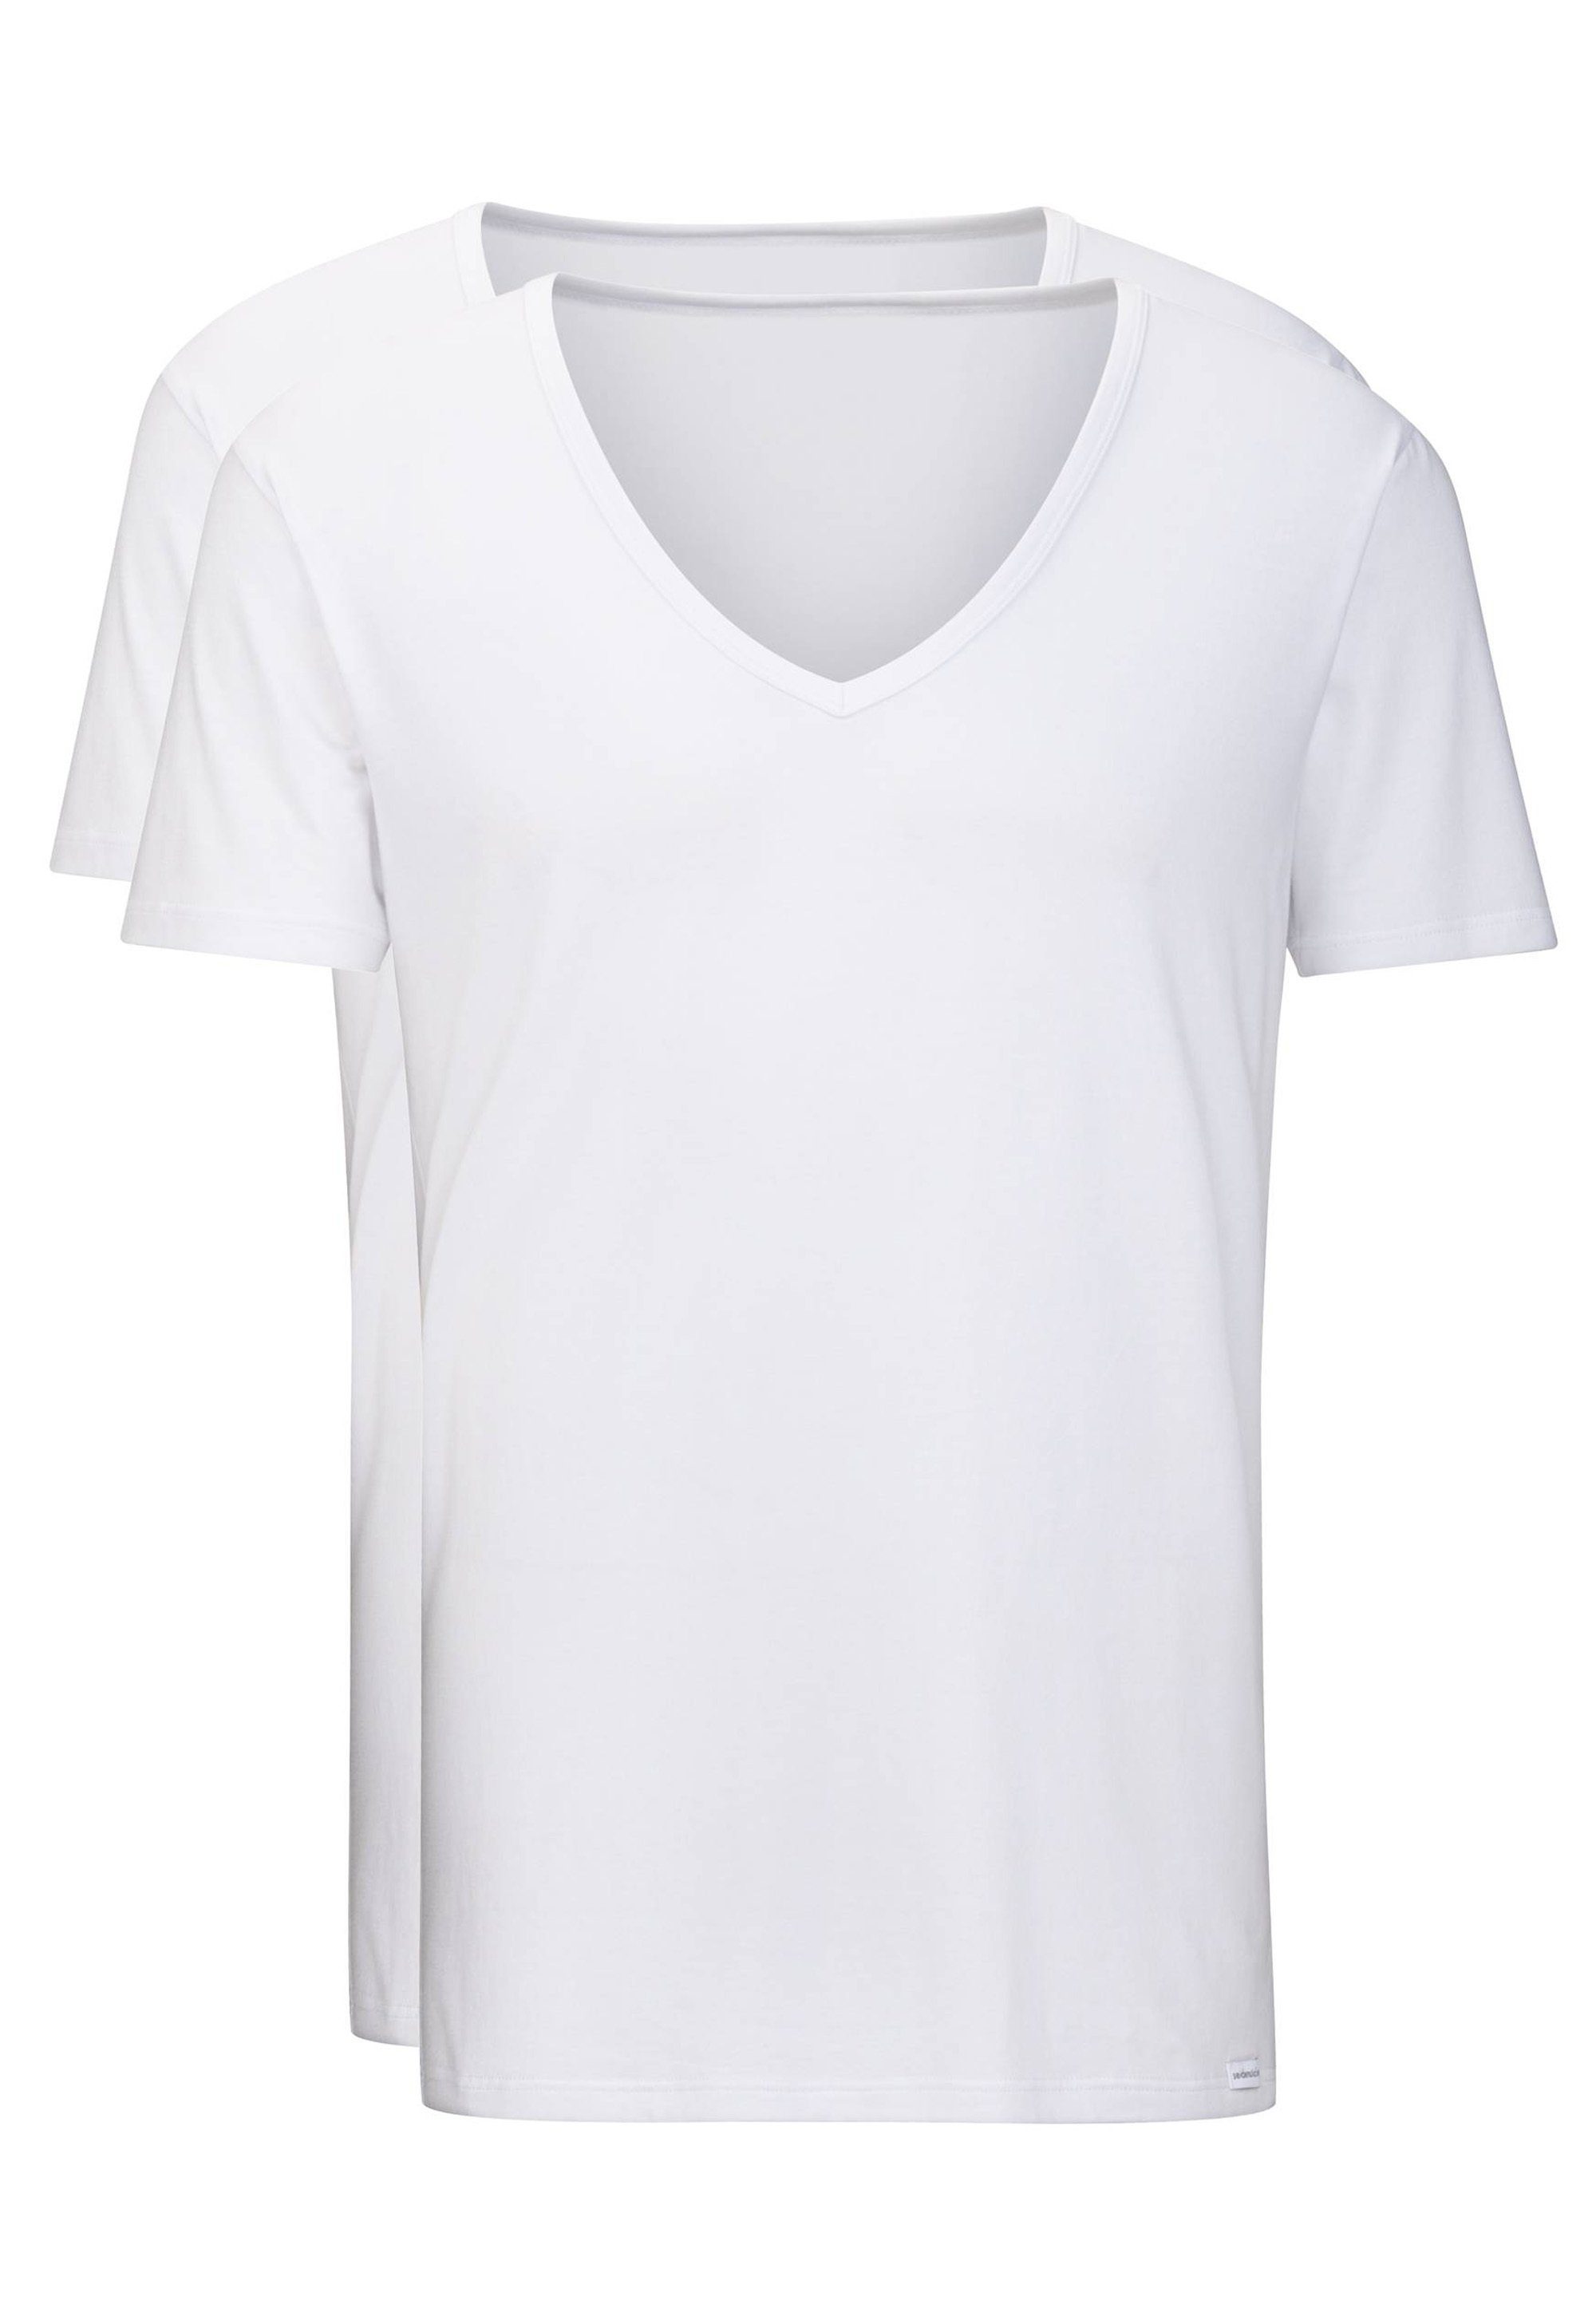 seidensticker Unterhemd Herren T-Shirt, 2er Pack - Comfort Cotton